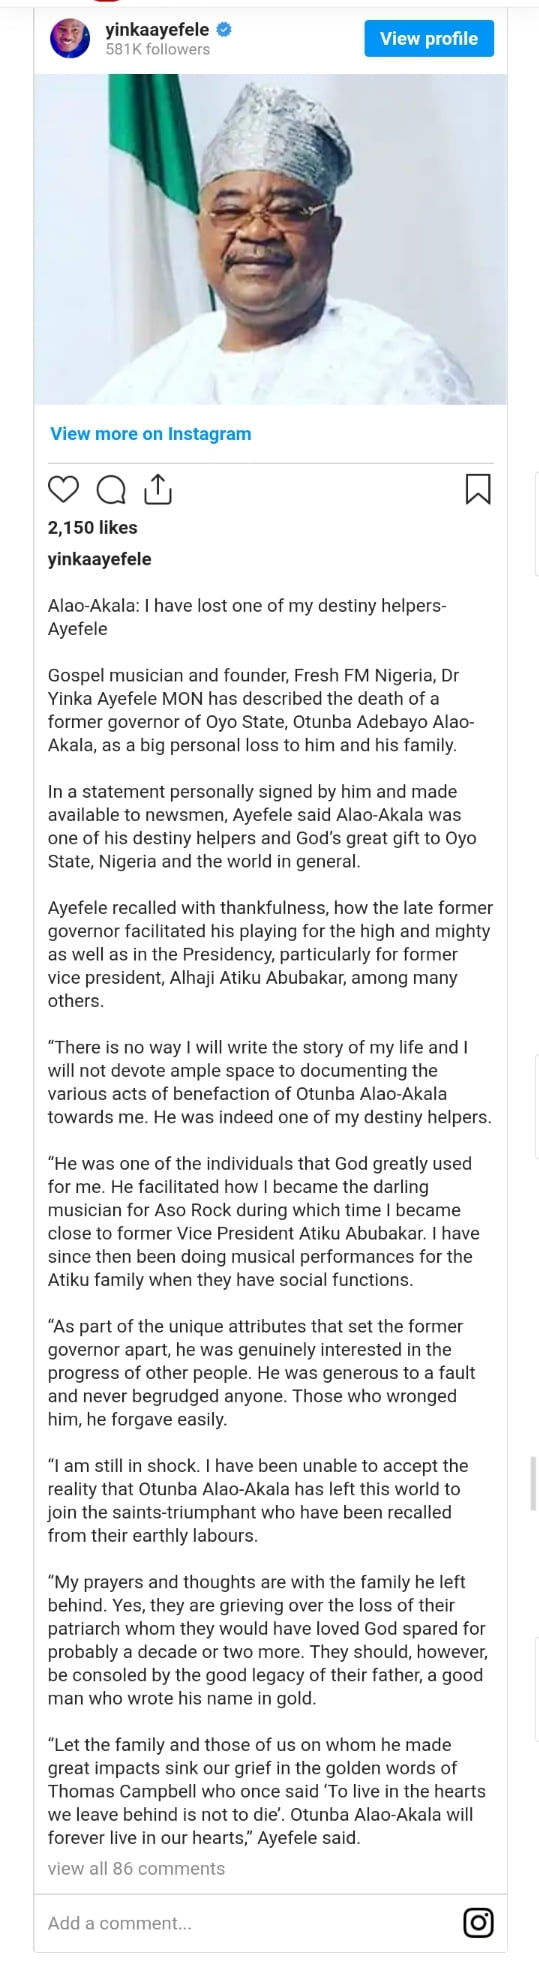 I'm still stunned. Yinka Ayefele Mourns the Death of My Destiny Aider